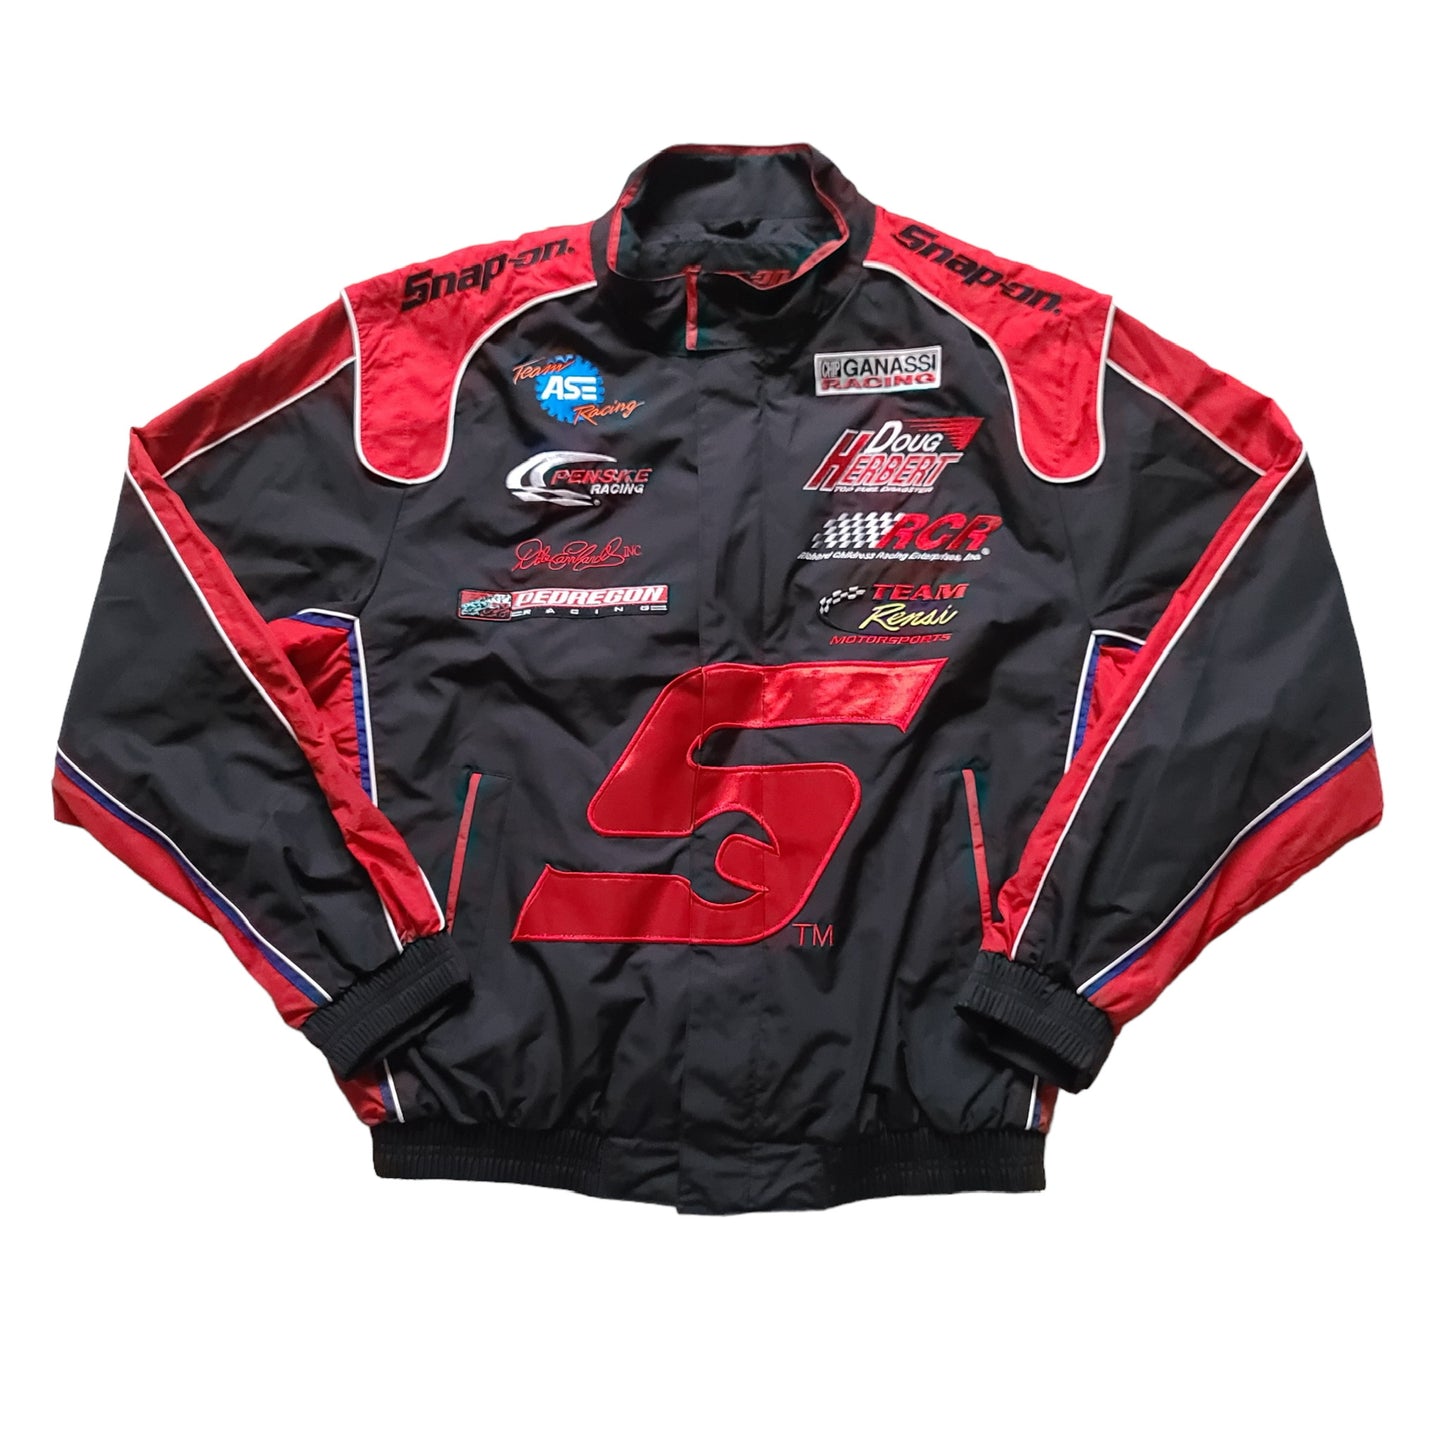 Doug Herbert Snap On Racing Red Black Windbreaker Jacket